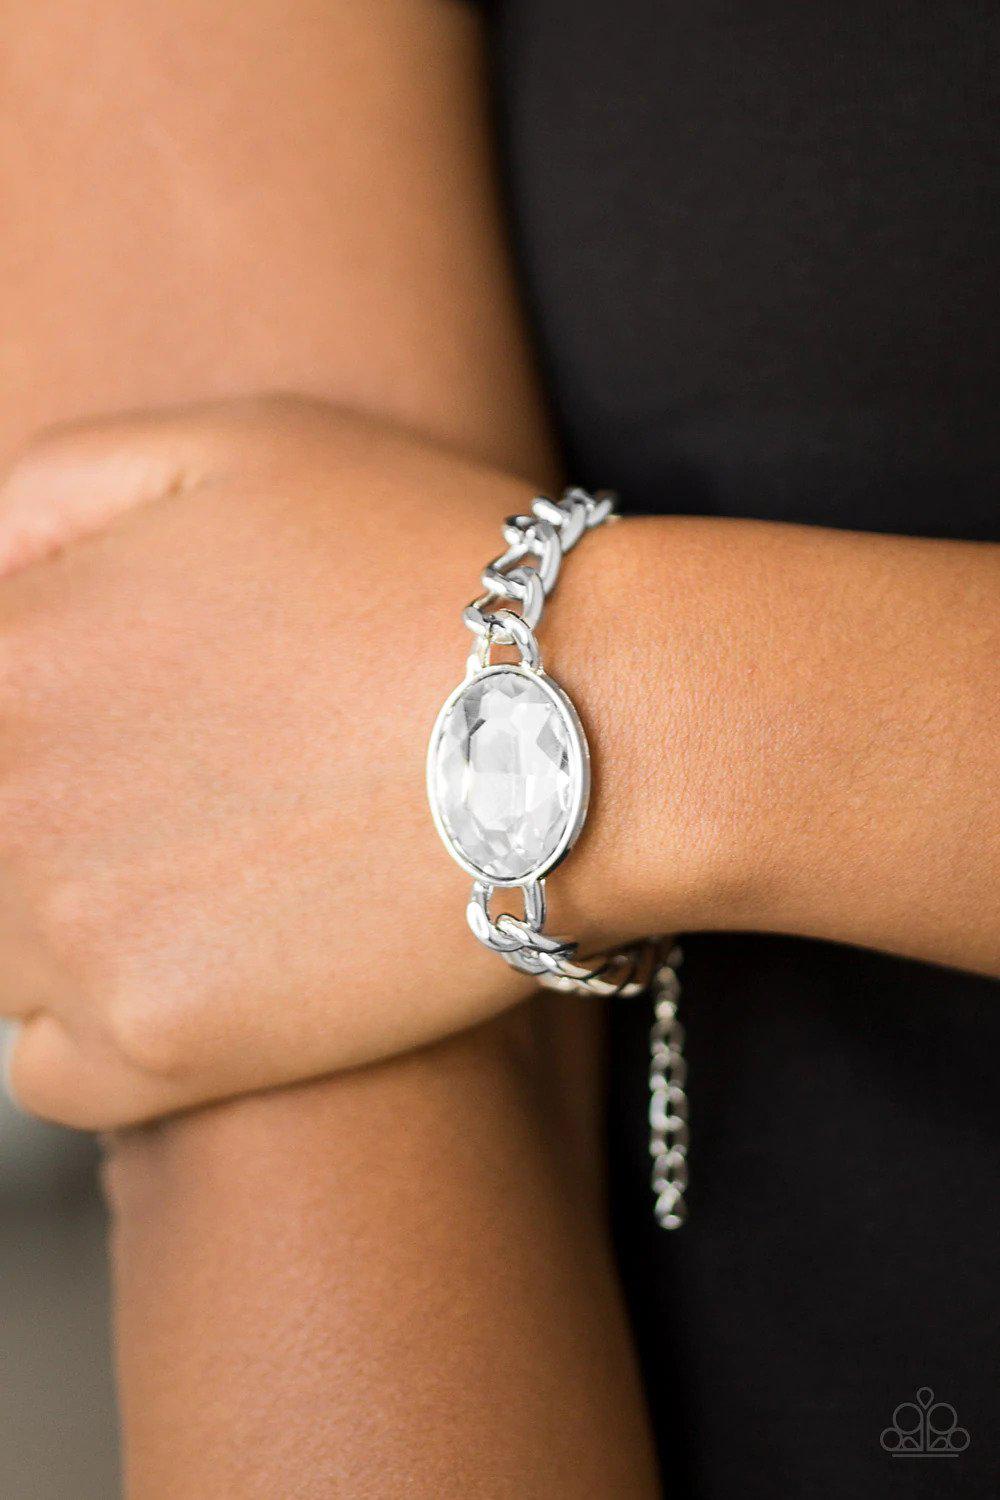 Luxury Lush White Bracelet - Paparazzi Accessories- lightbox - CarasShop.com - $5 Jewelry by Cara Jewels